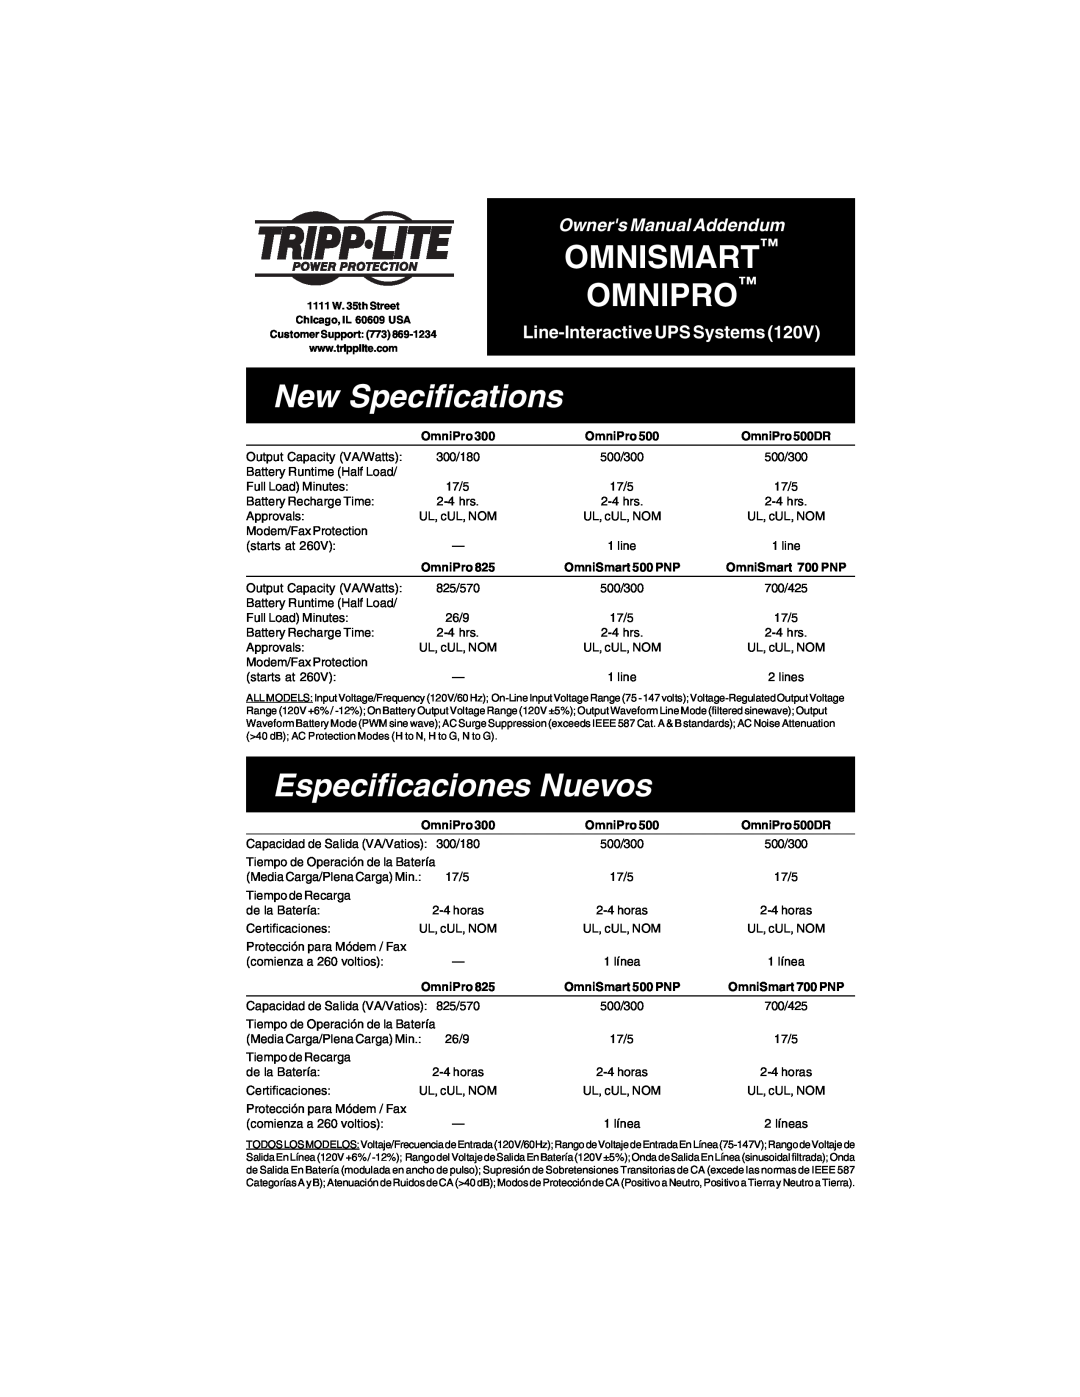 Tripp Lite 700 PNP owner manual New Specifications, Especificaciones Nuevos, Omnismart Omnipro, Owners Manual Addendum 